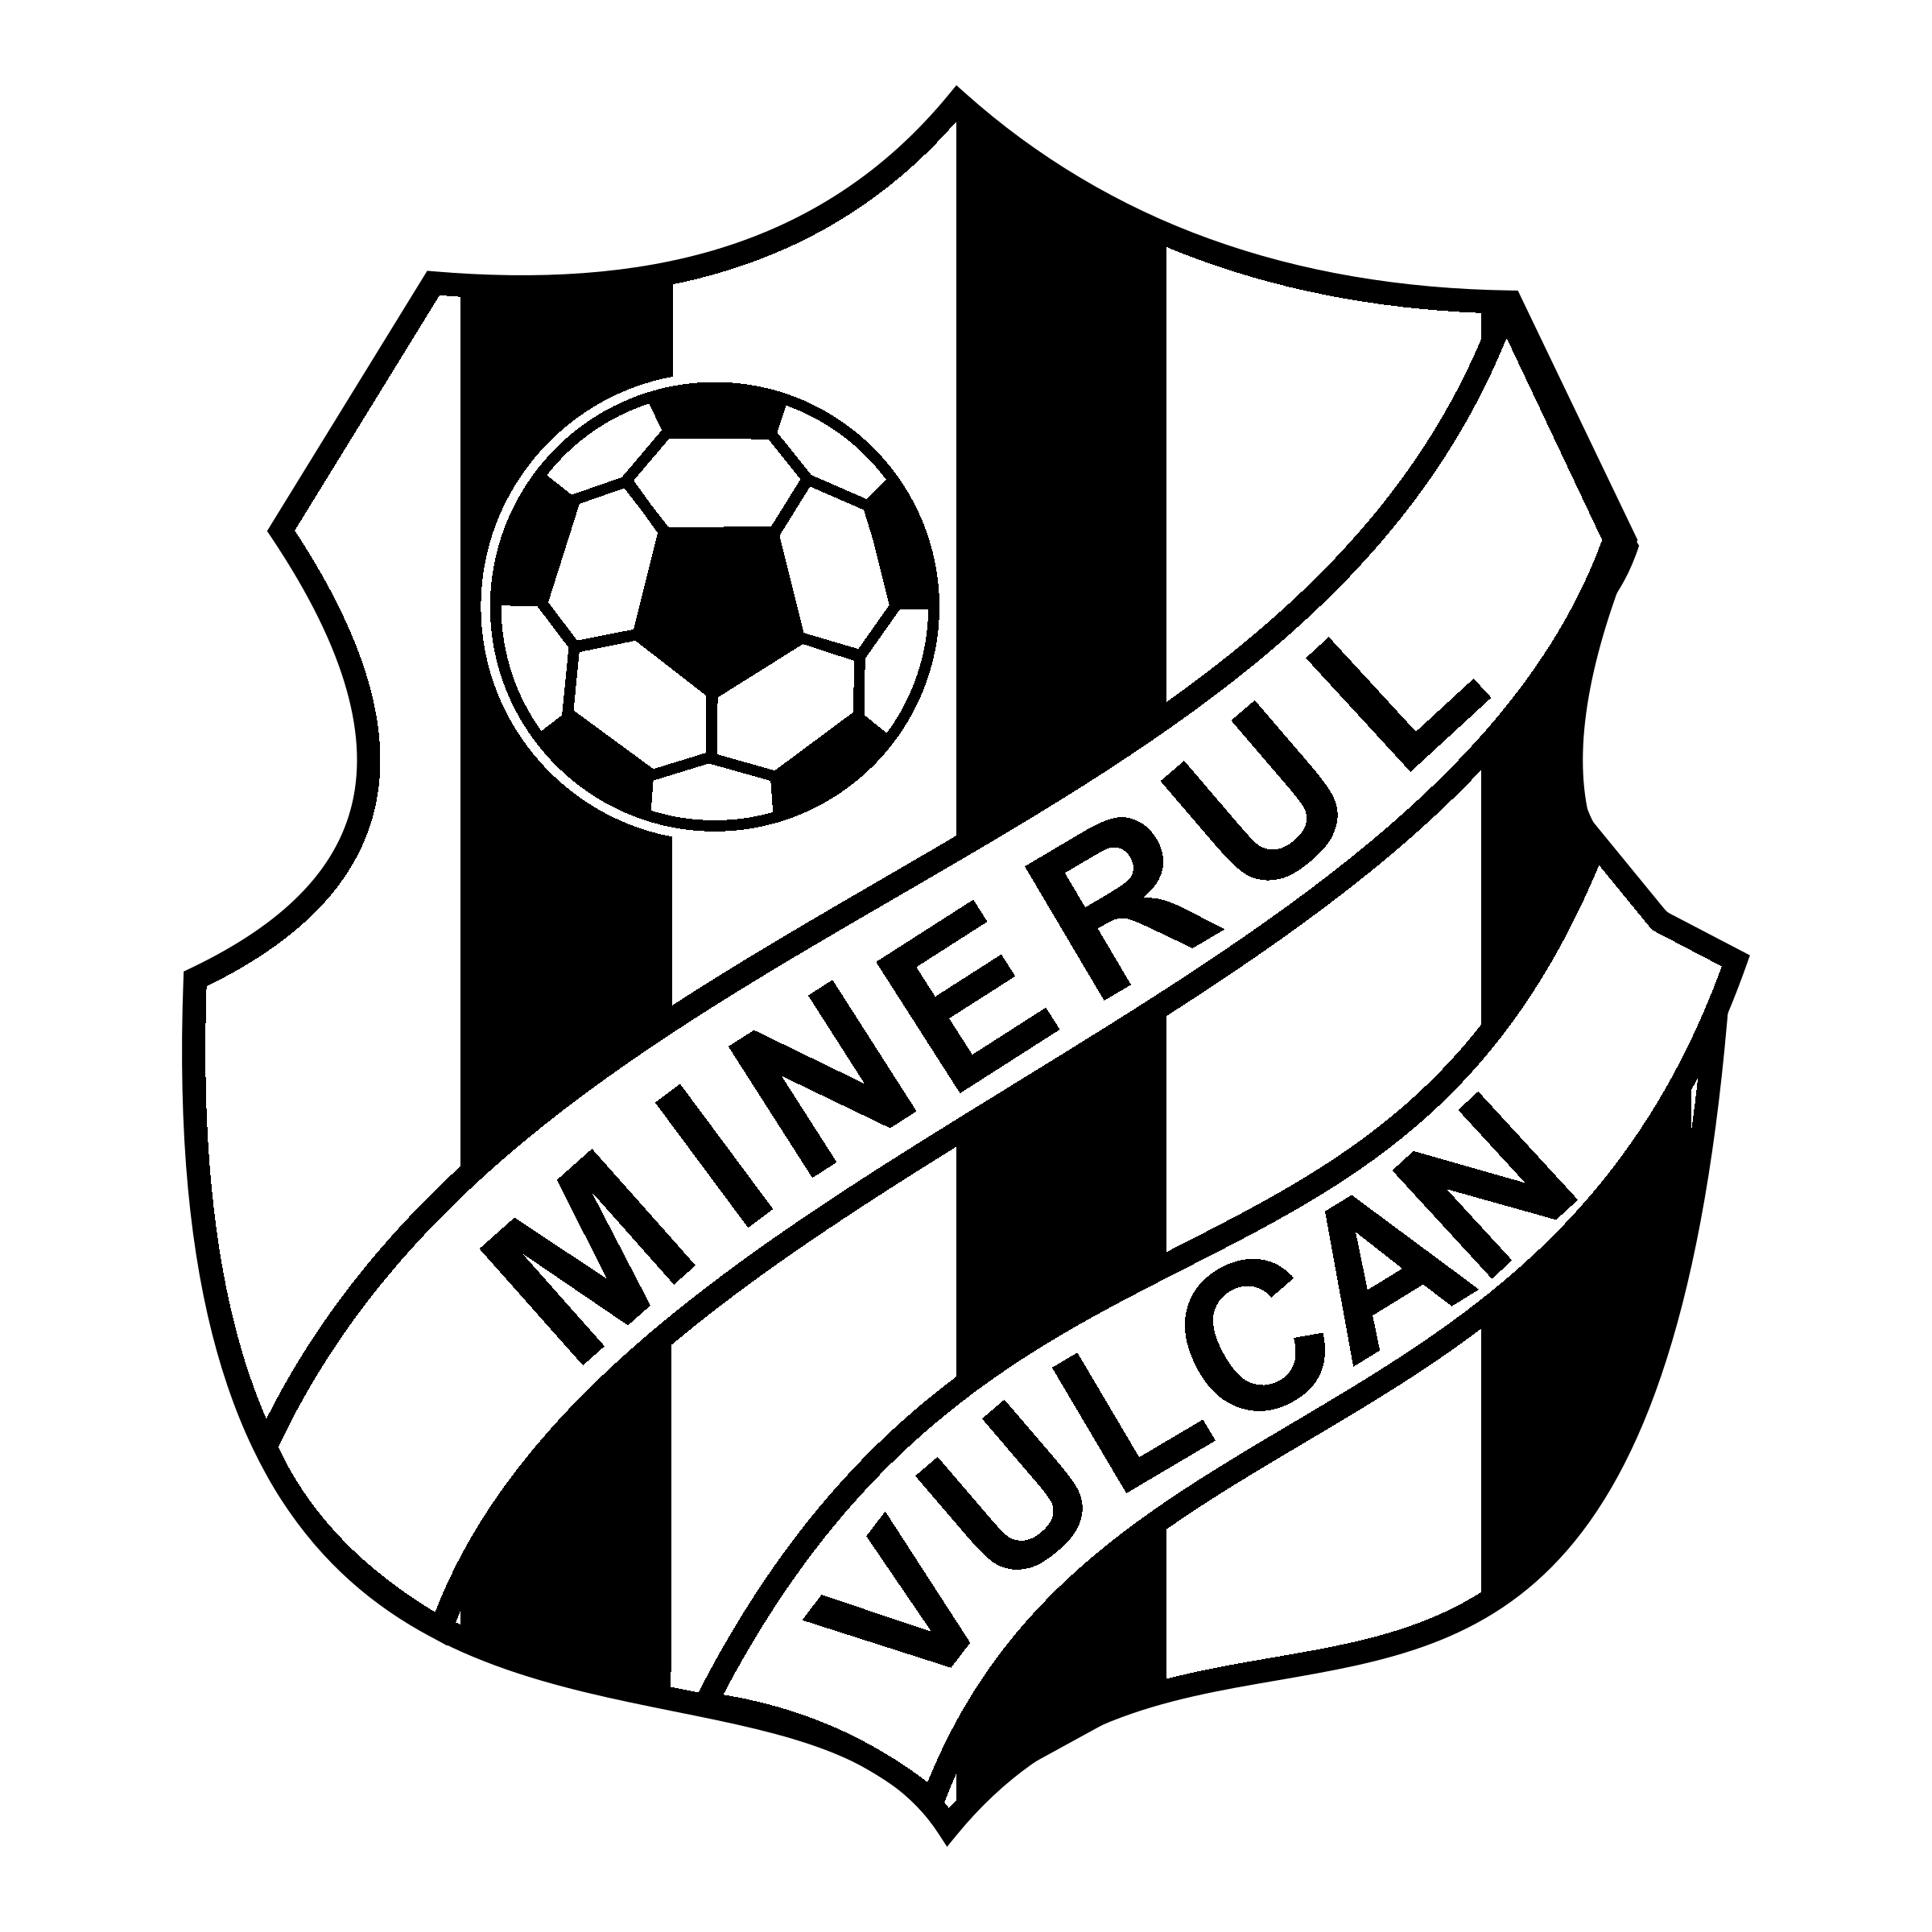 Vulcan Logo - Minerul Vulcan Logo PNG Transparent & SVG Vector - Freebie Supply